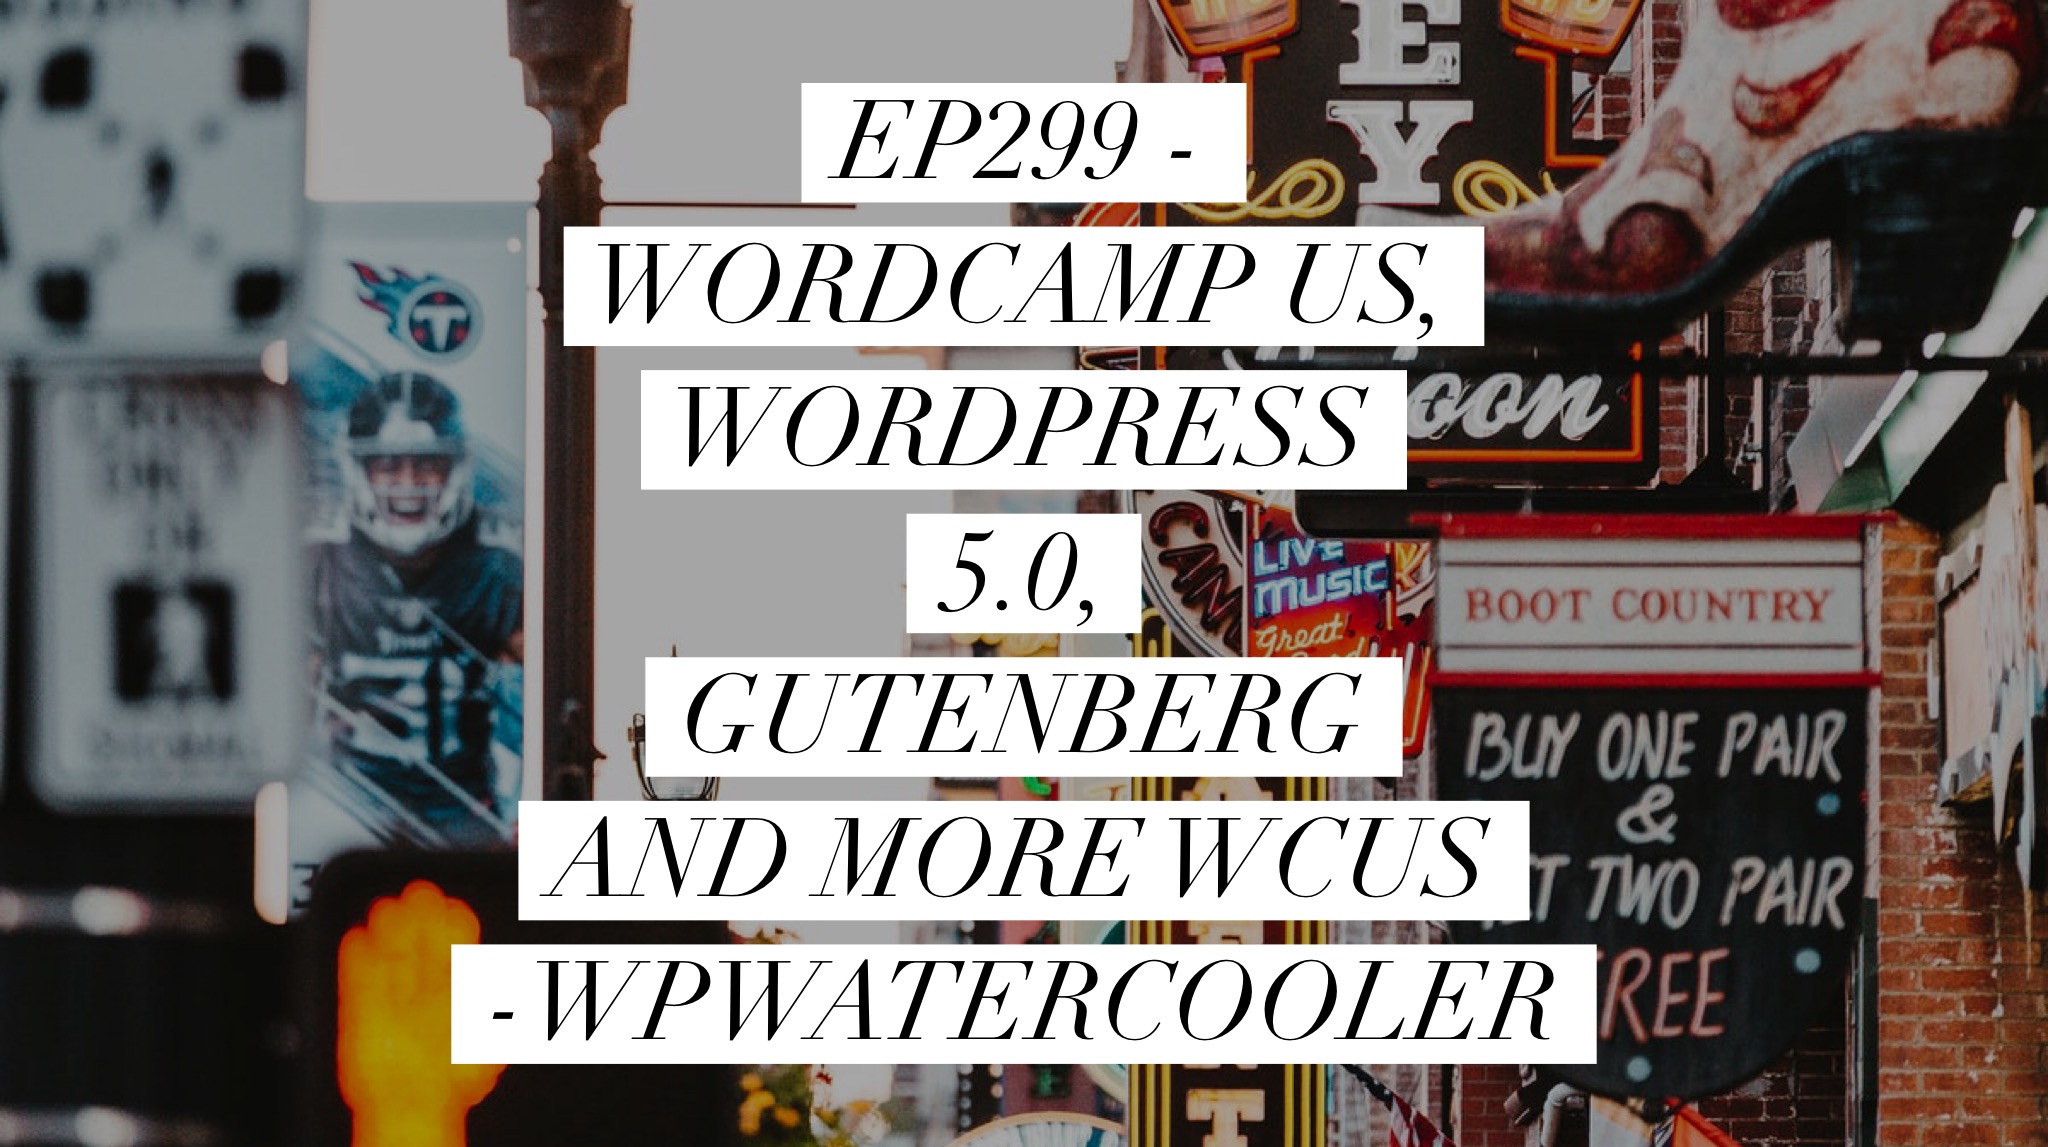 EP299 – WordCamp US, WordPress 5.0, Gutenberg and more WCUS – WPwatercooler